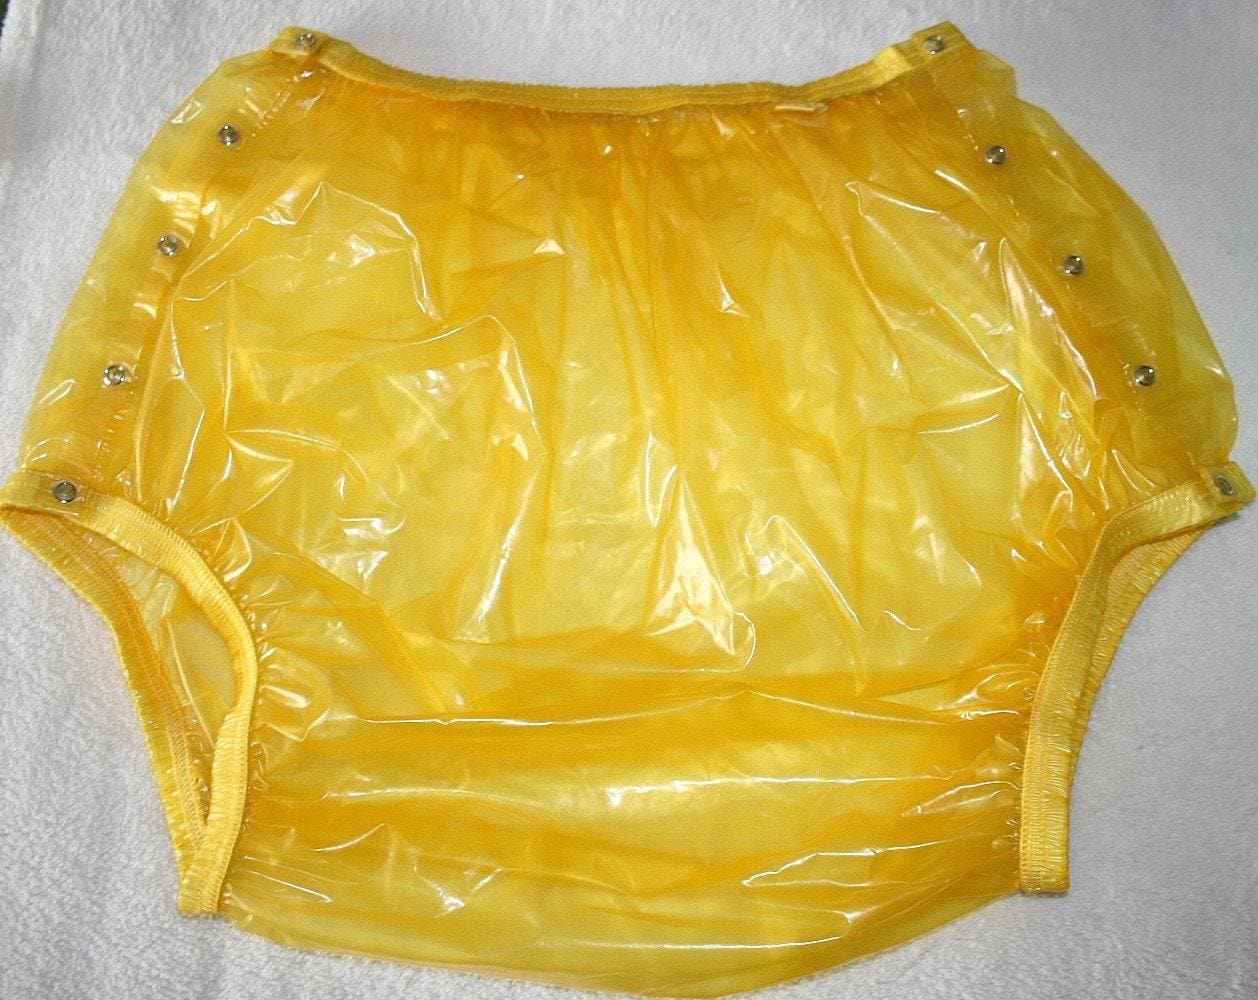 Komfort Knöpfer Windelhose Euroflex Gummi-PVC gelb transparent